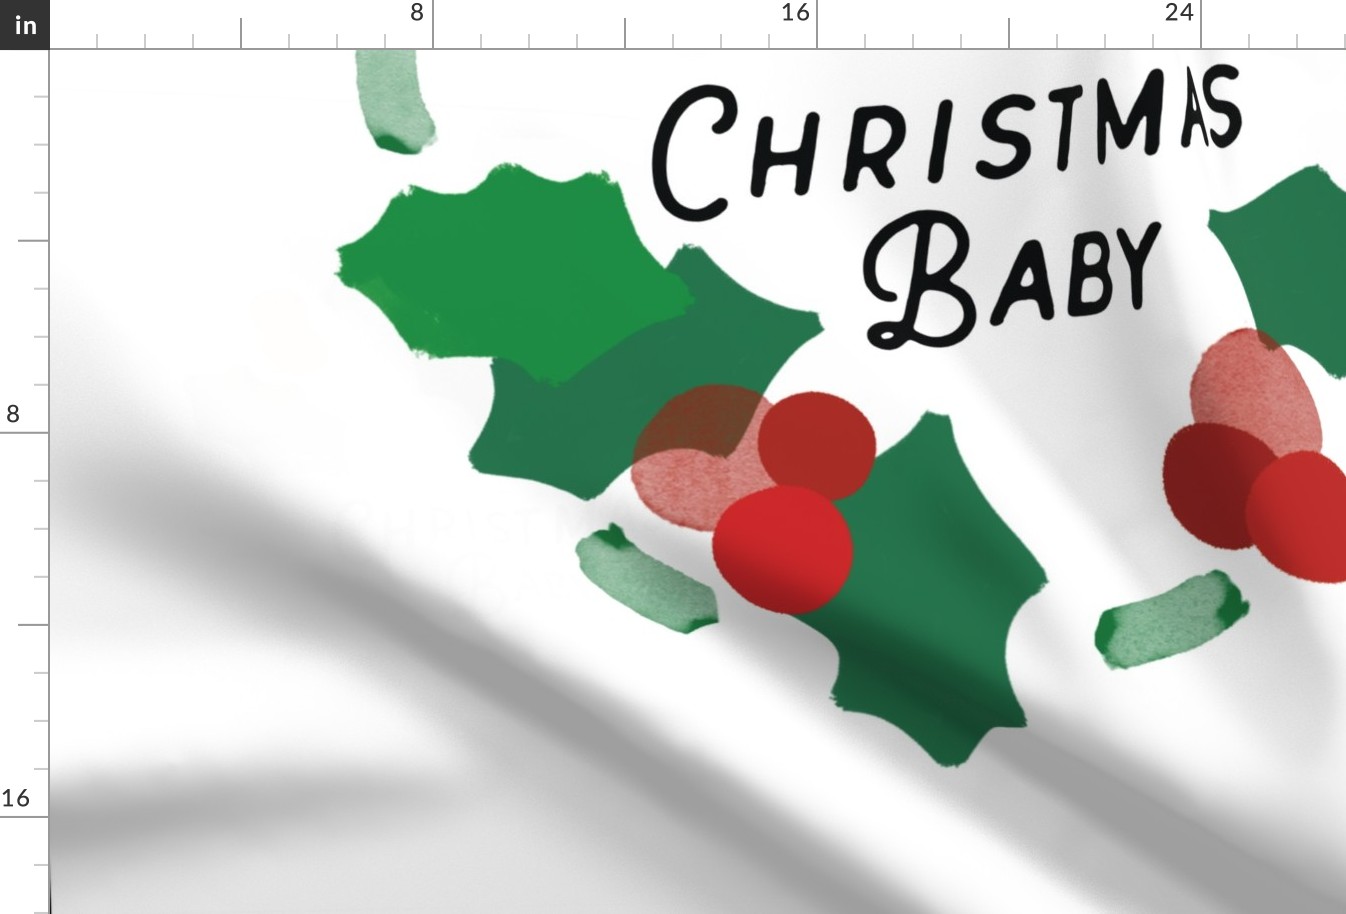 1 blanket + 2 loveys: christmas baby wreath